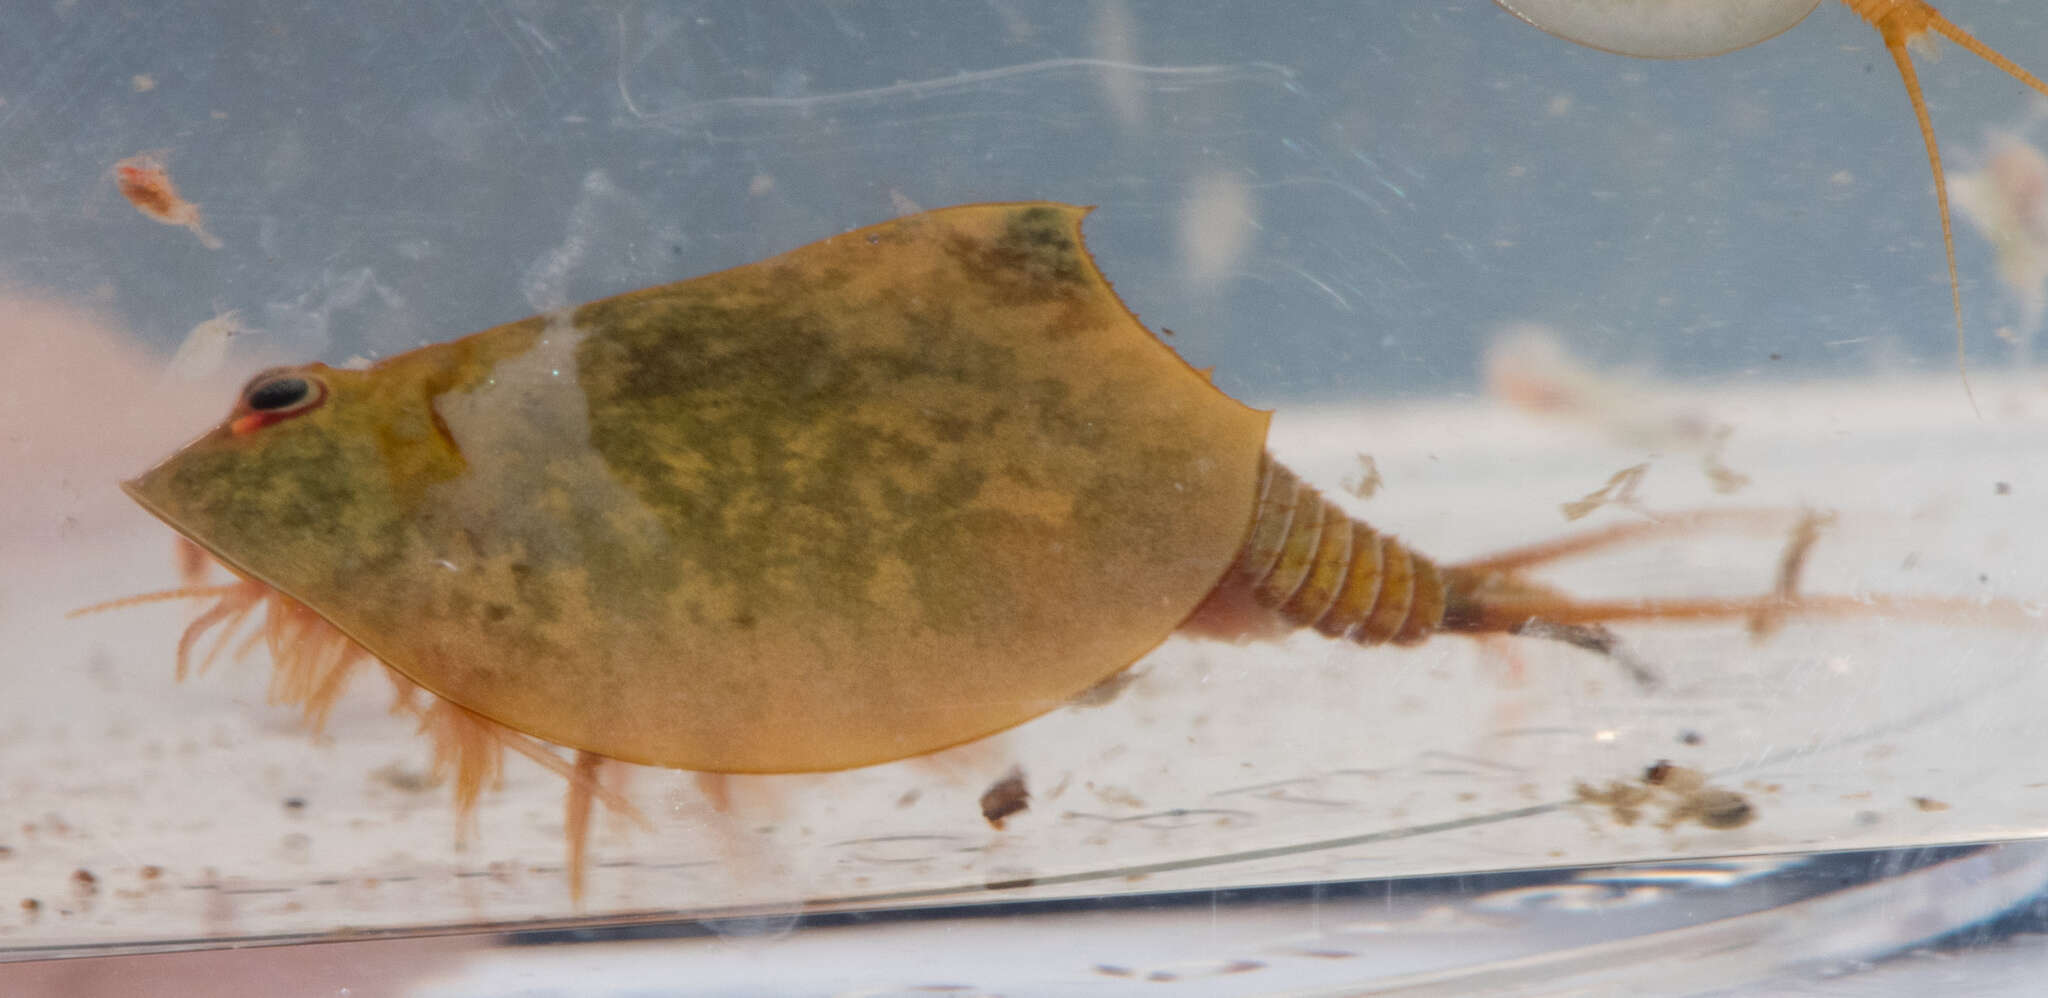 Image of Vernal pool tadpole shrimp